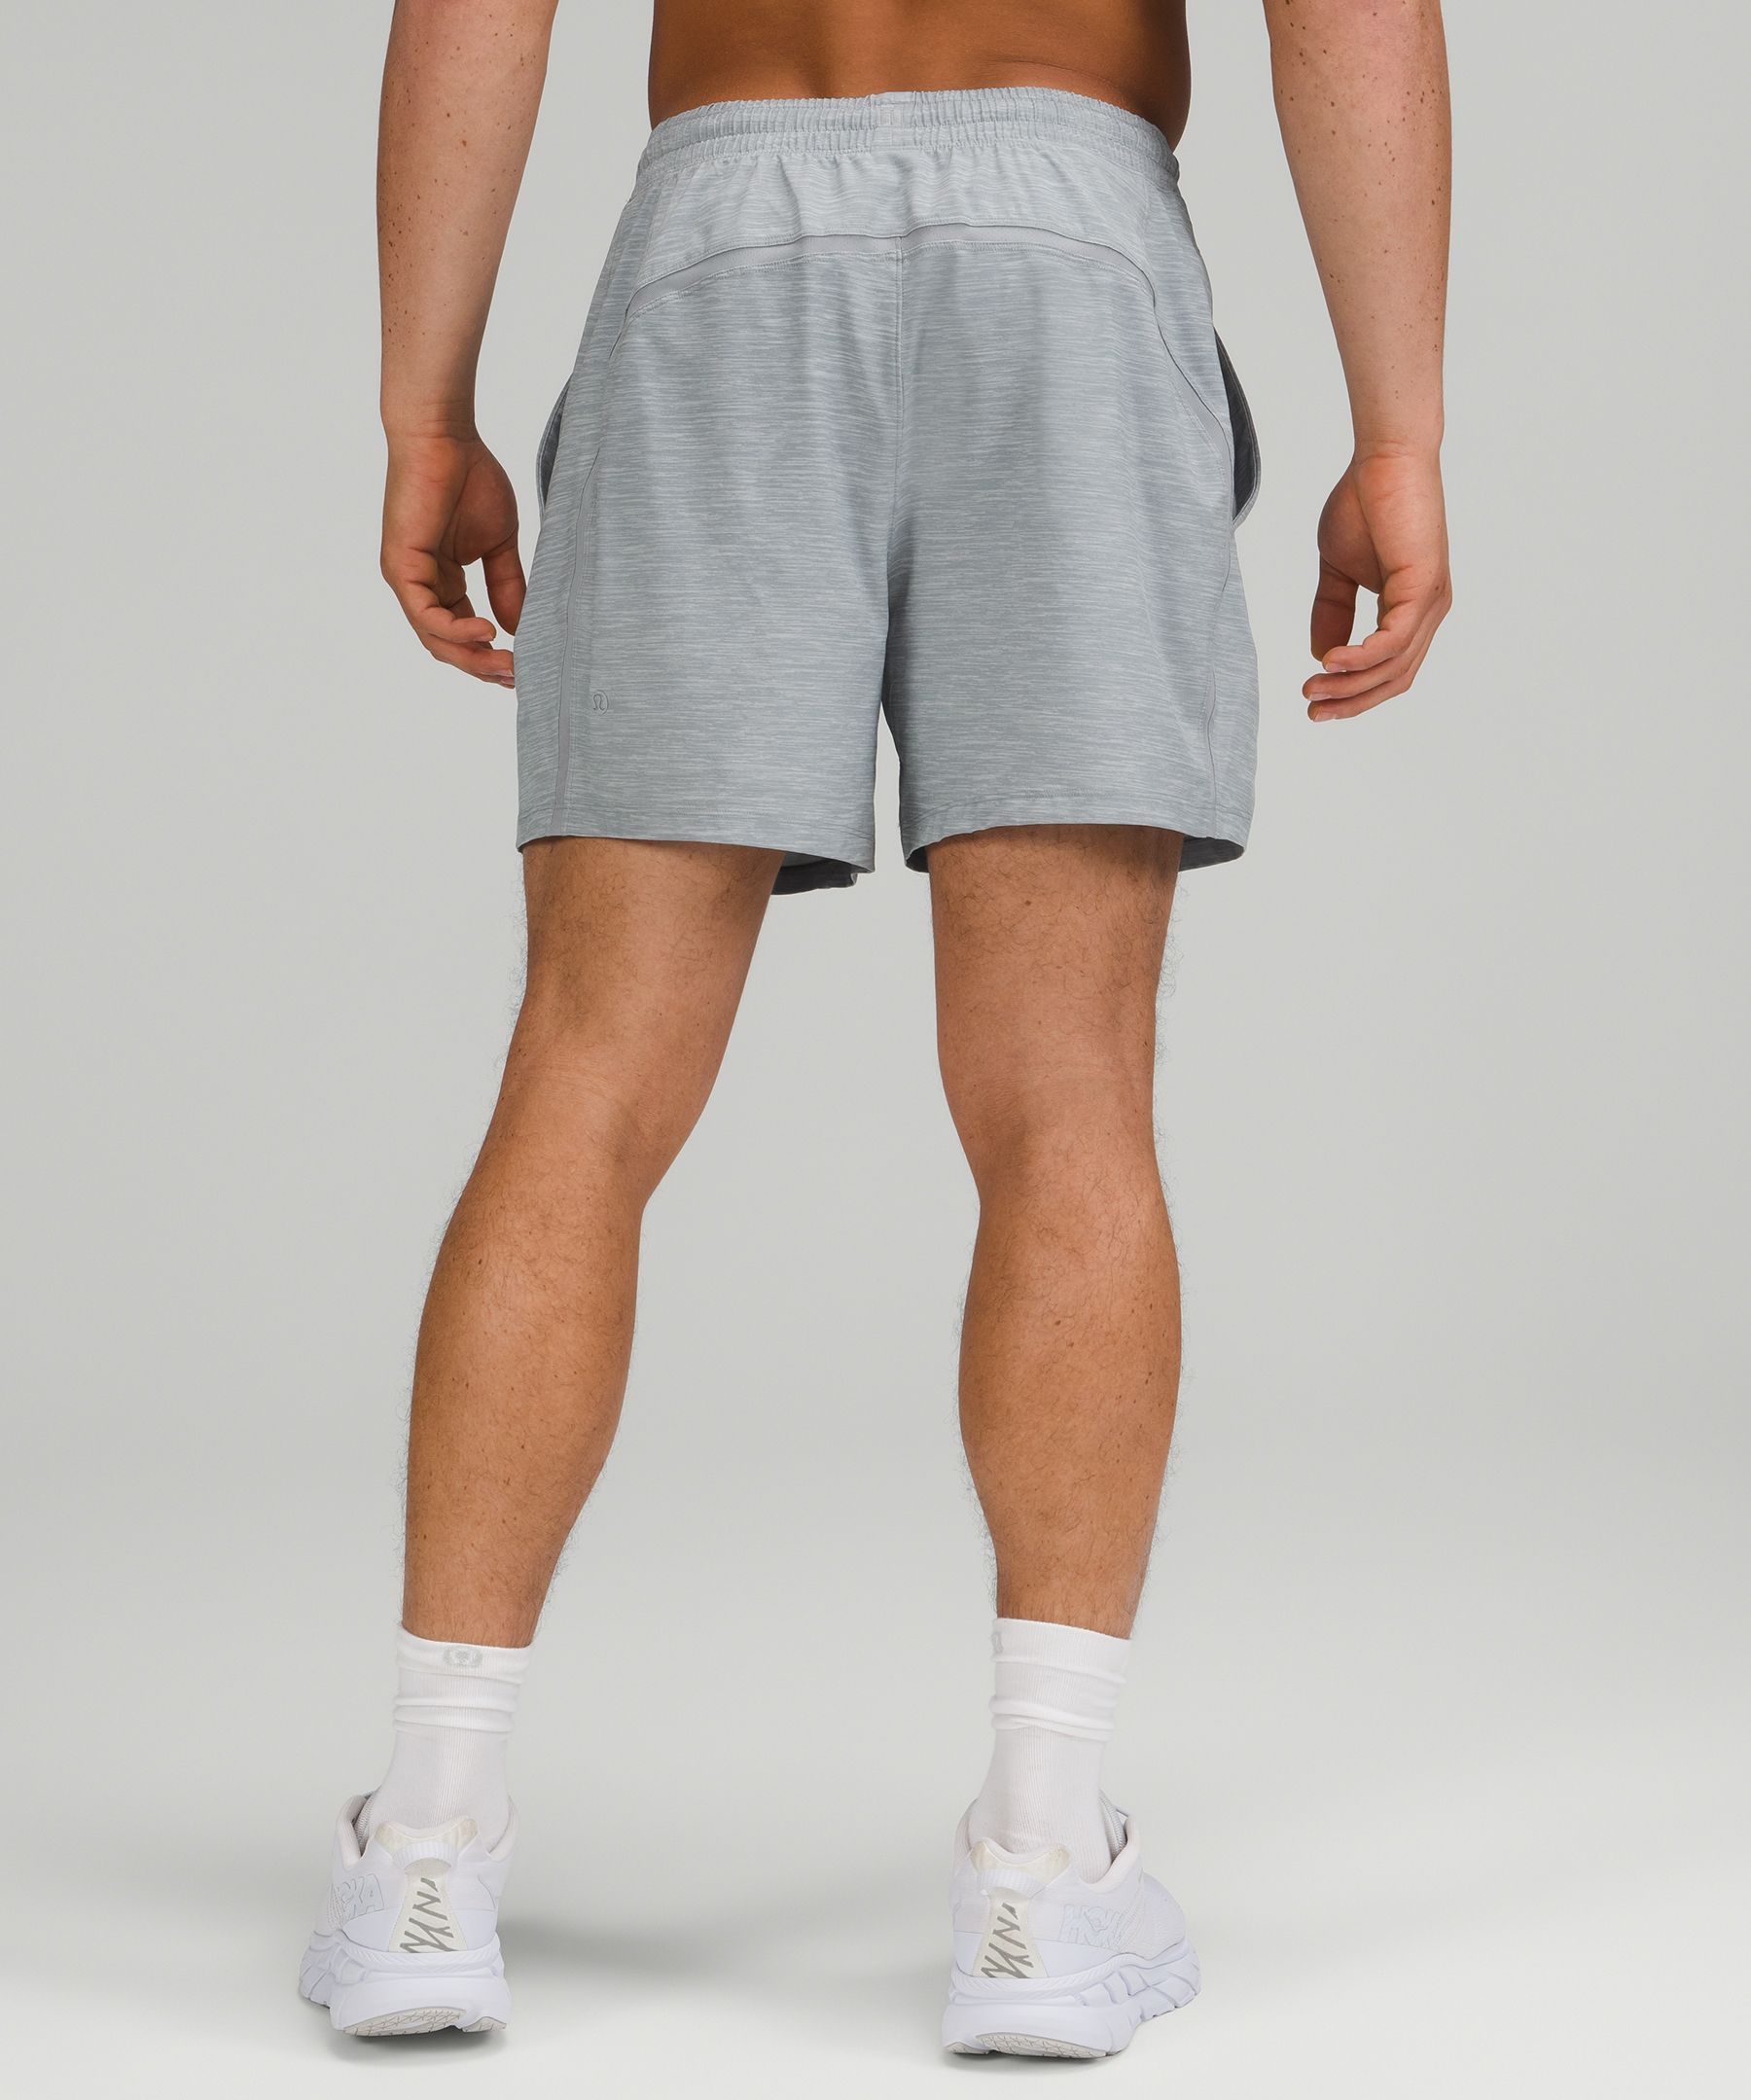 EUC Lululemon Shorts with compression liner